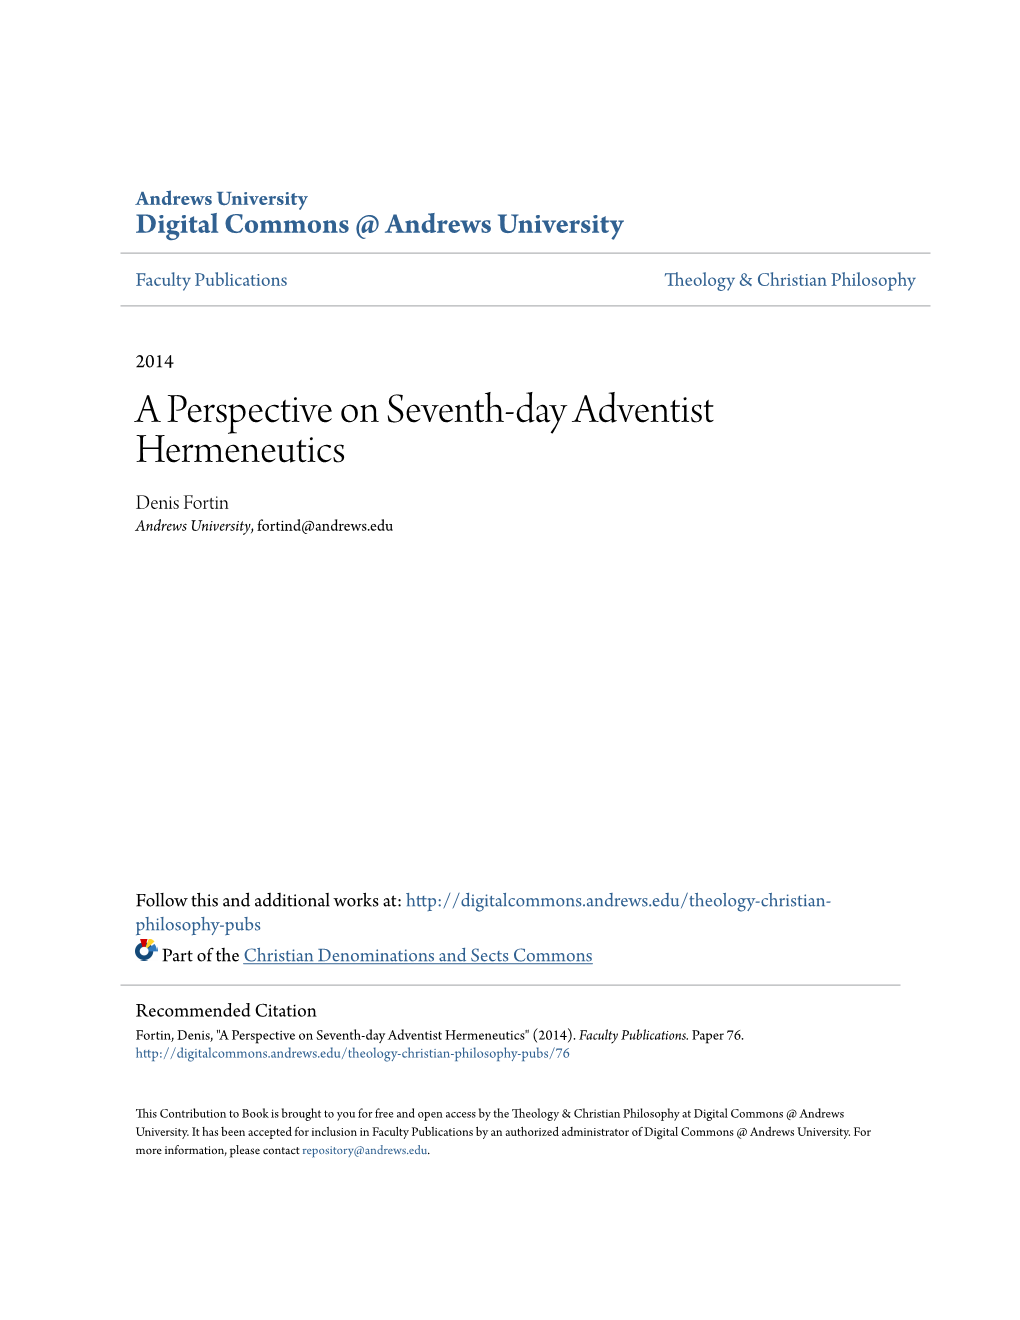 A Perspective on Seventh-Day Adventist Hermeneutics Denis Fortin Andrews University, Fortind@Andrews.Edu